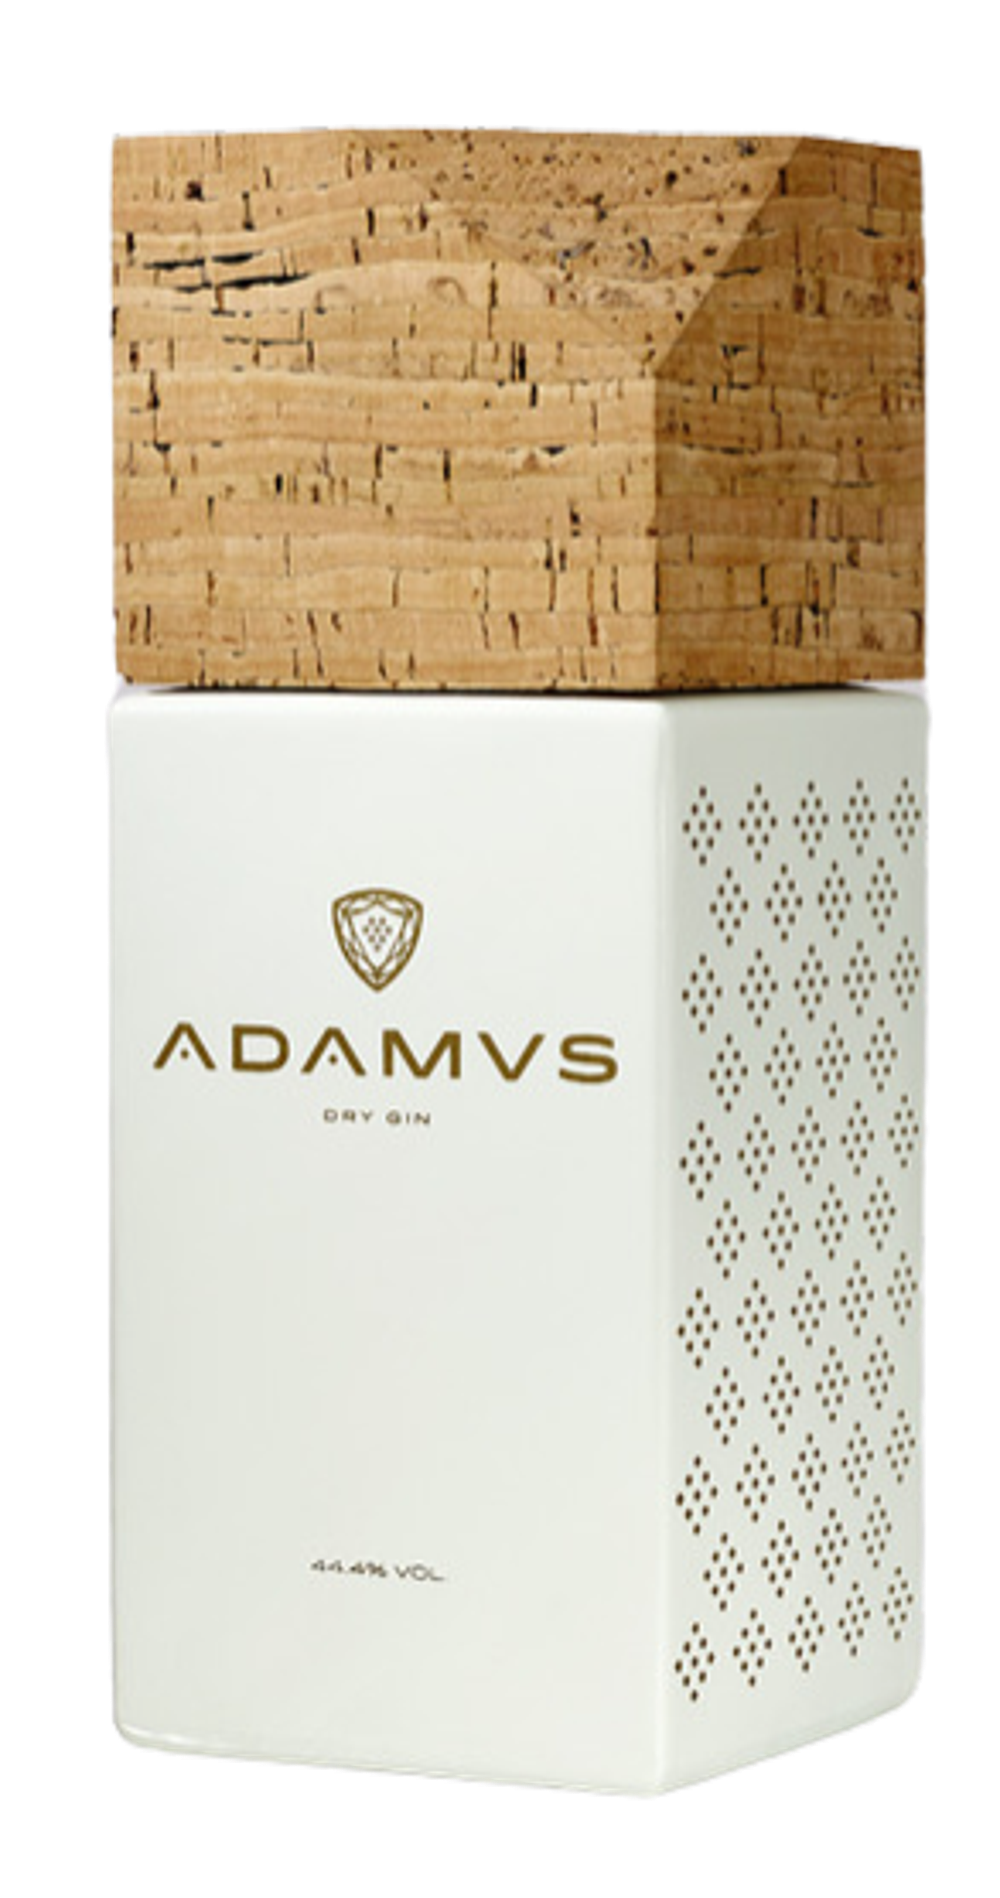 Adamus Organic Dry Gin 44.4% 0.7L, Spirits